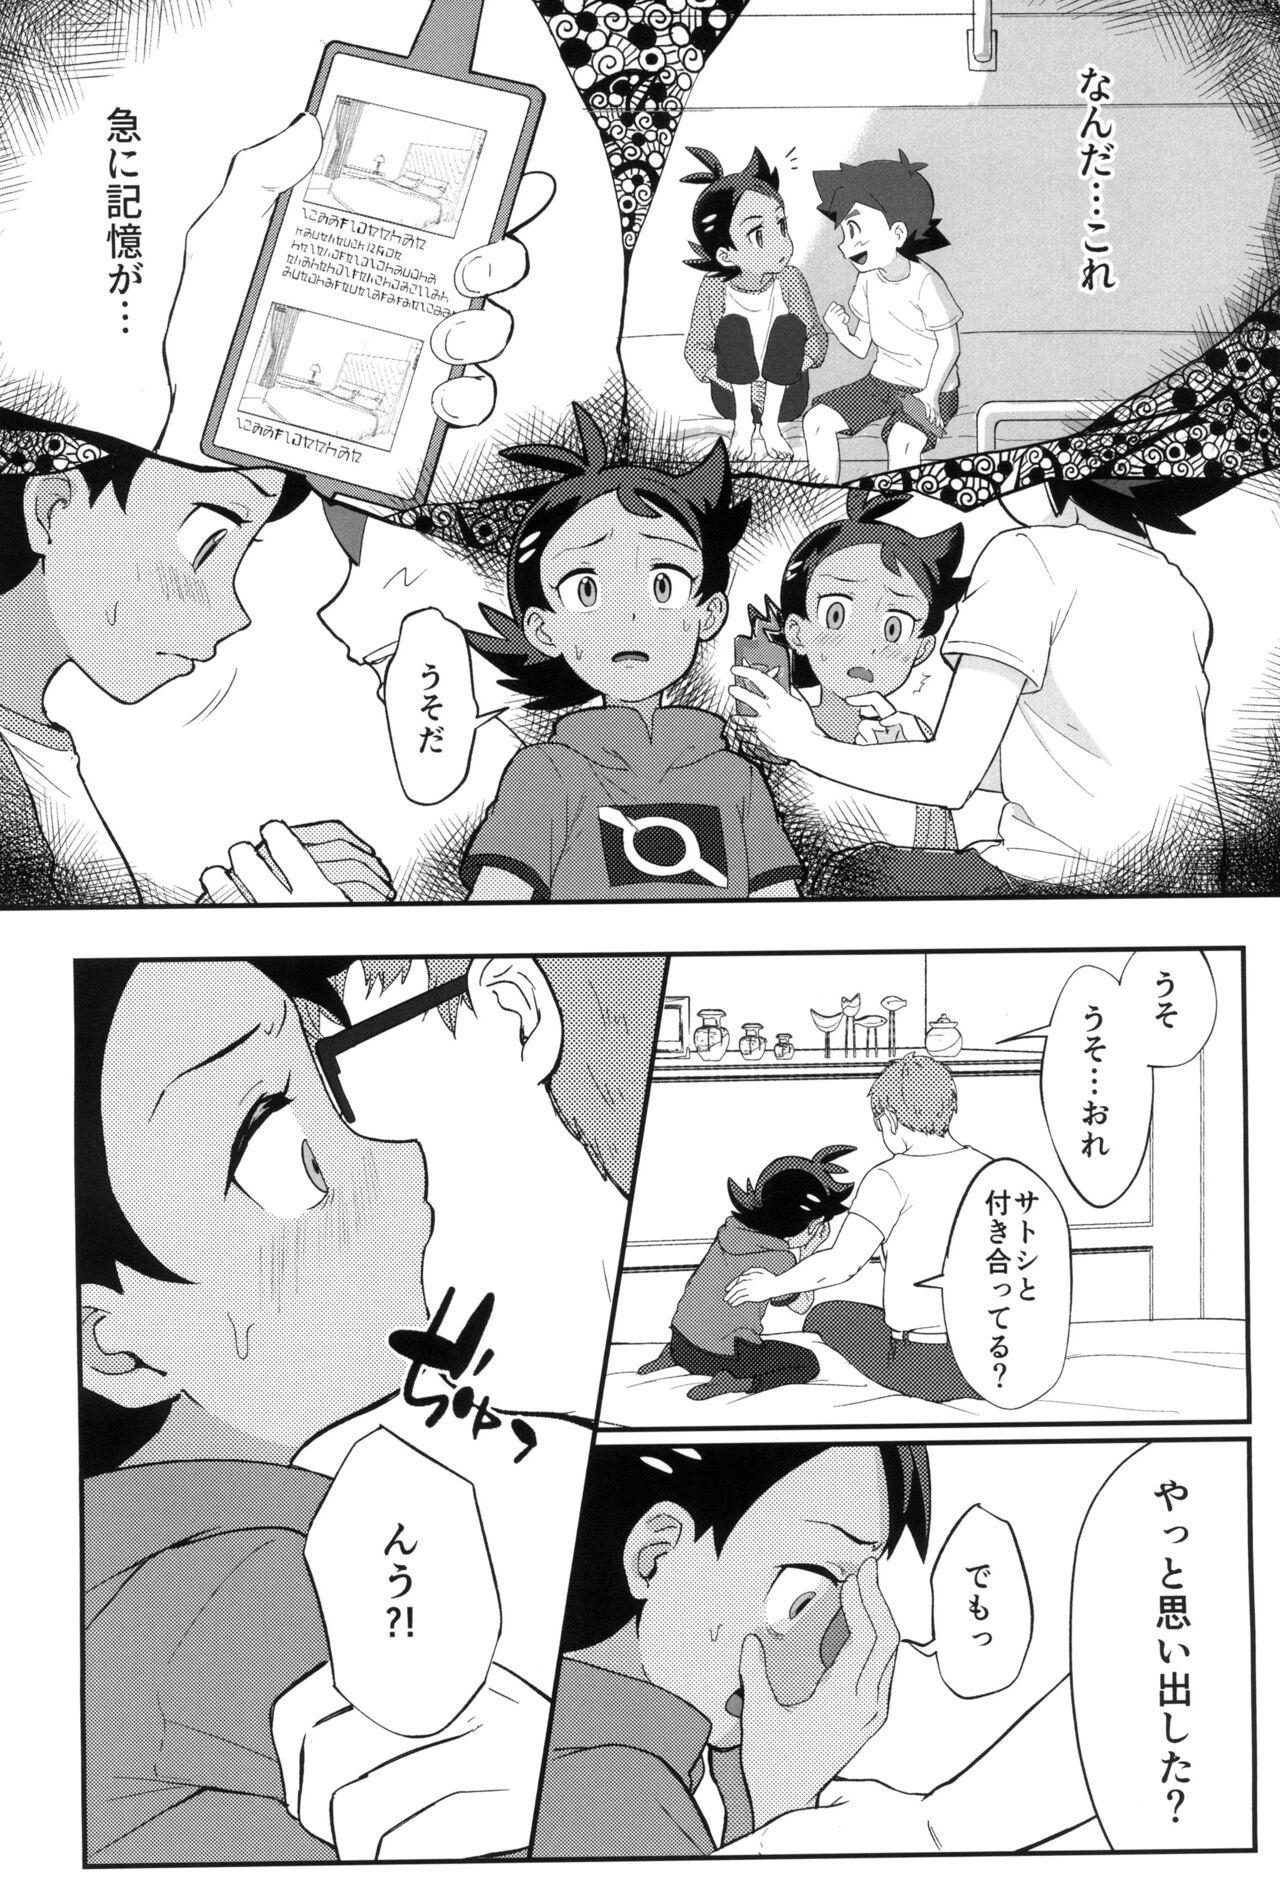 Yanks Featured Daijoubu! ! Ryou omoida yo - Pokemon | pocket monsters Full Movie - Page 10